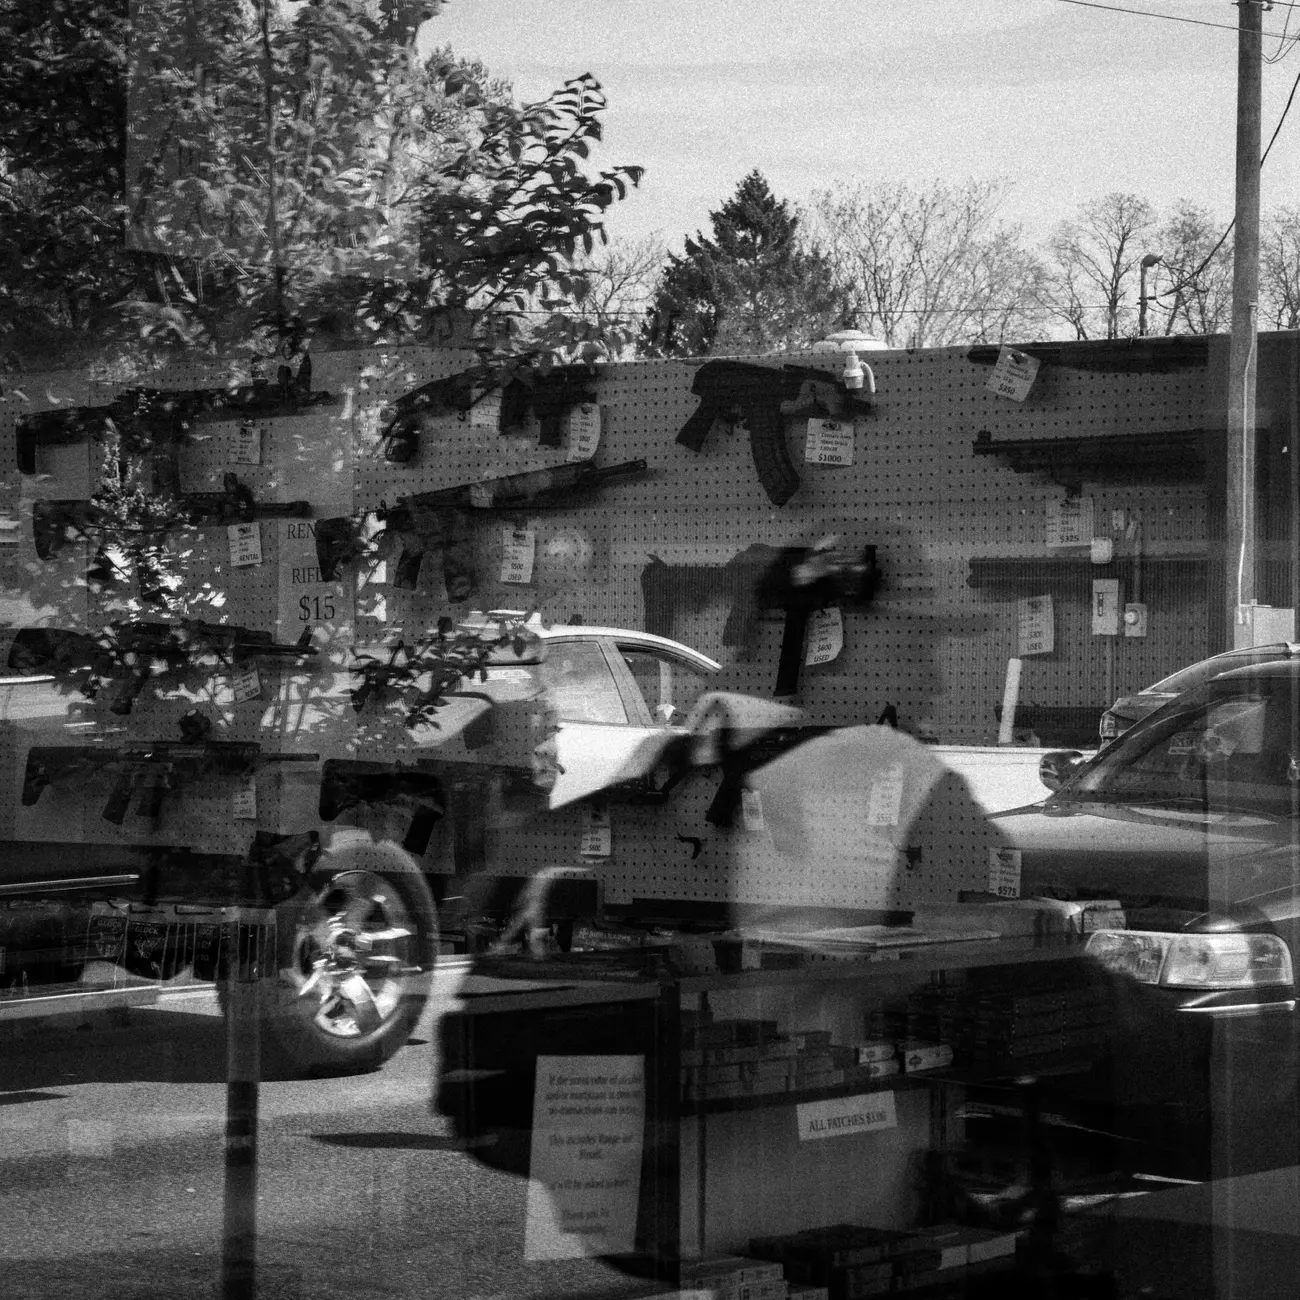 Gun stores: reflection of a man on a bike looking through a gun store window